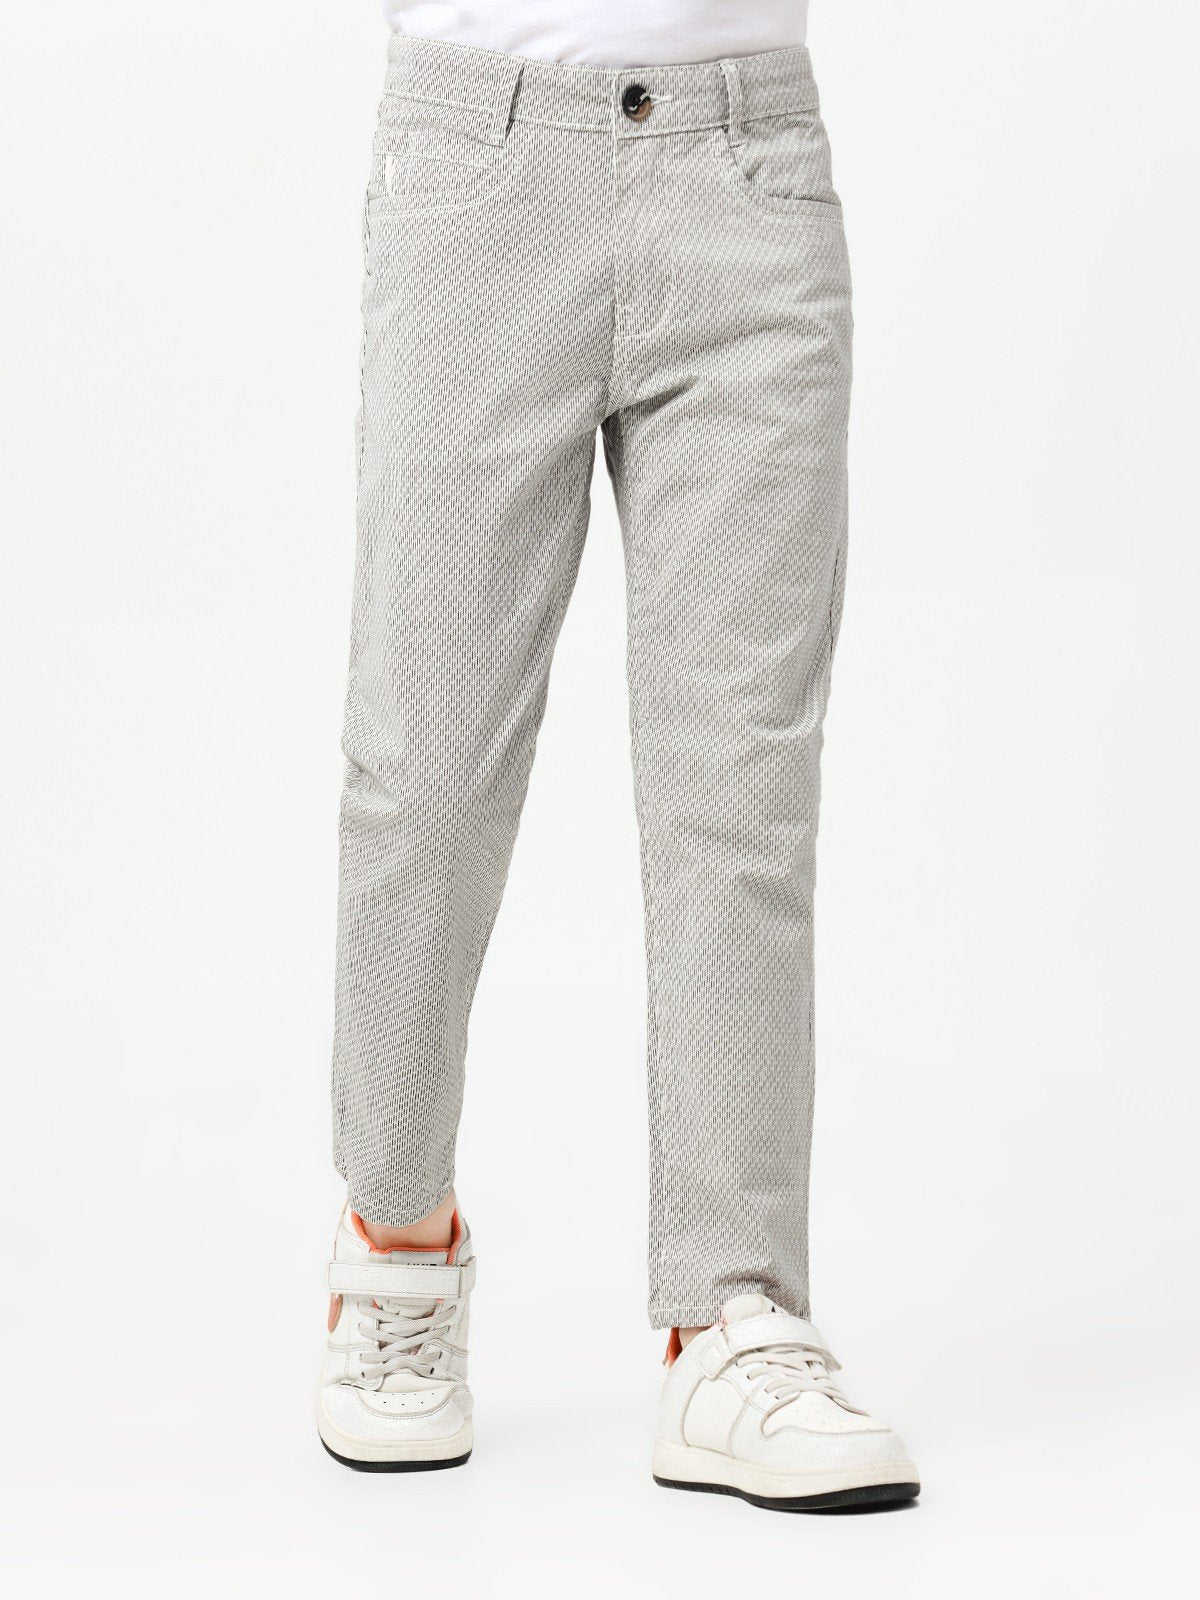 Boy's White & Grey Chino Pant - EBBCP23-028